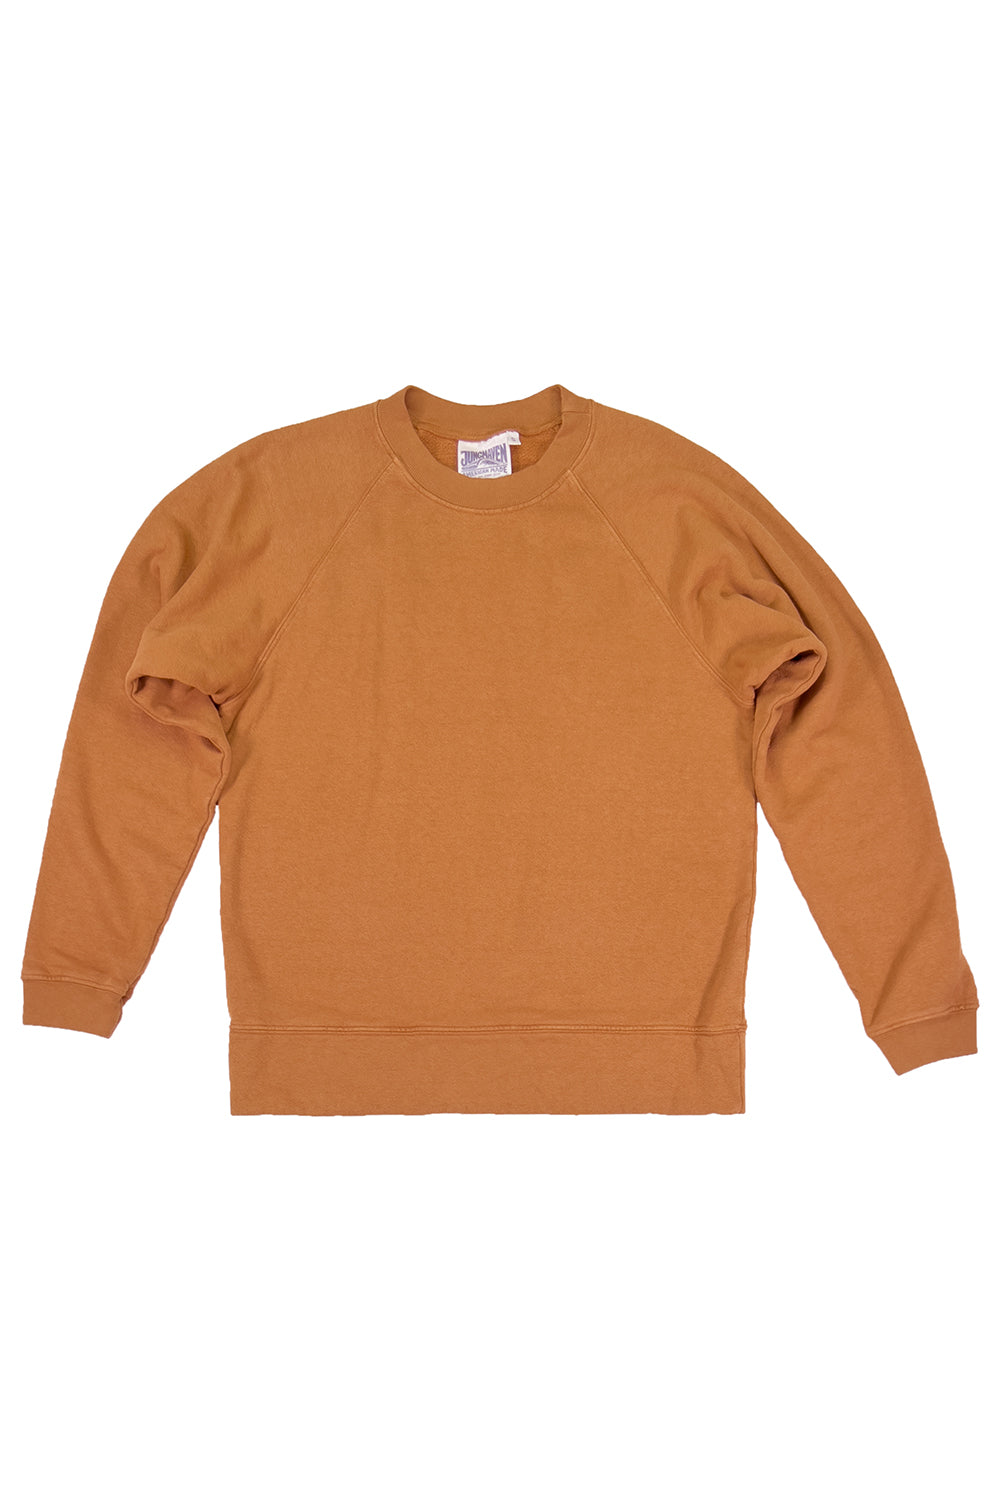 Sierra Raglan Sweatshirt - Sale Colors | Jungmaven Hemp Clothing & Accessories / Color: Copper